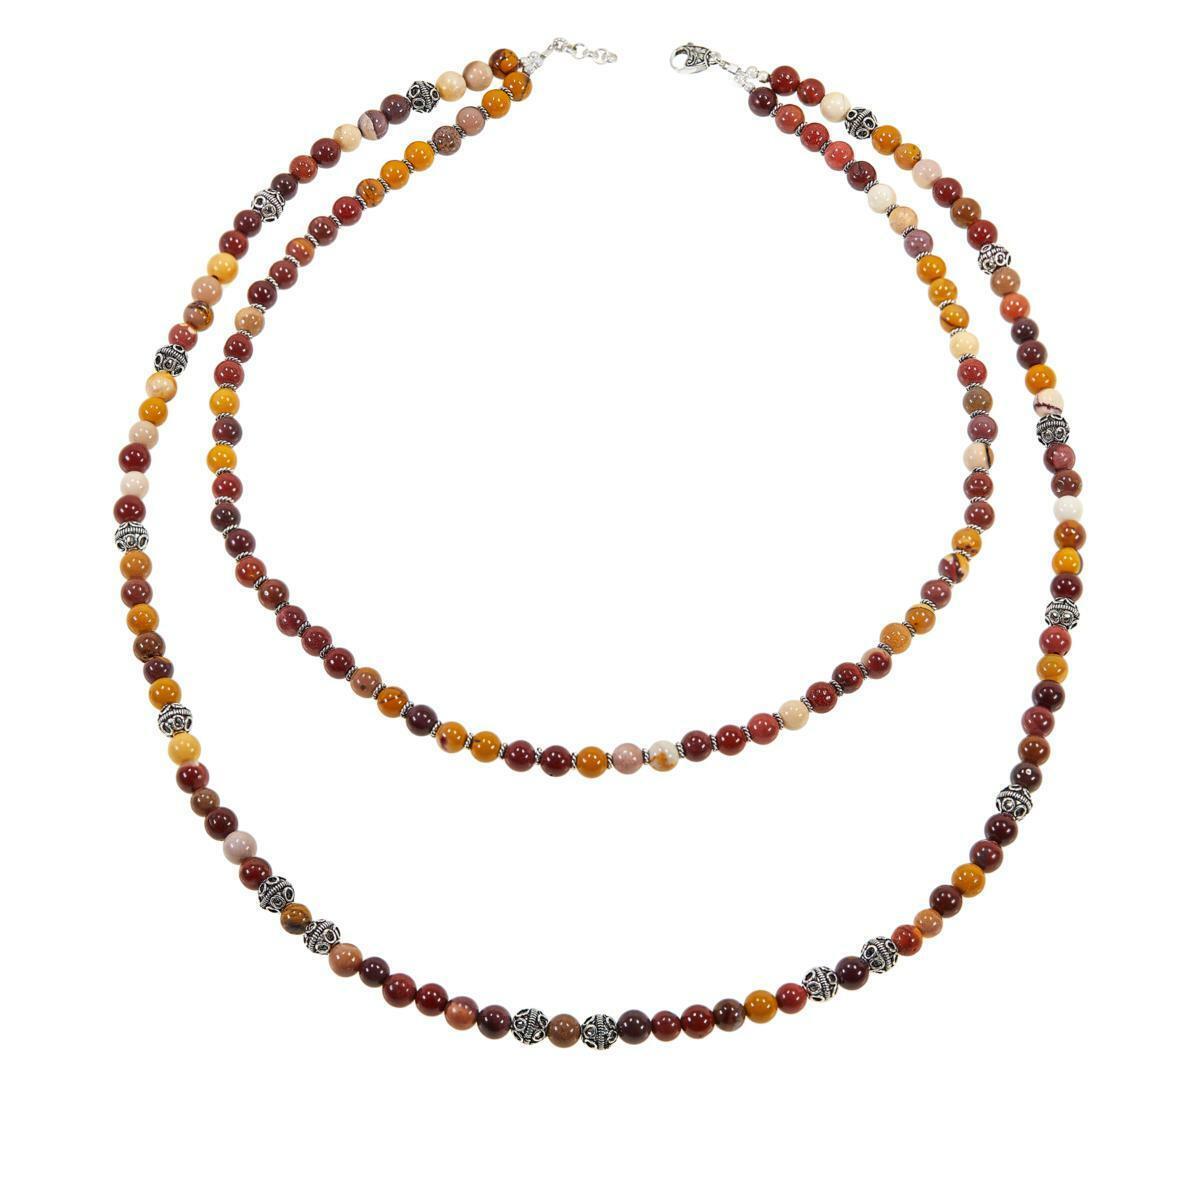 Ottoman Silver Mookite Color 2-Strand Gemstone Bead Necklace - HSN $170